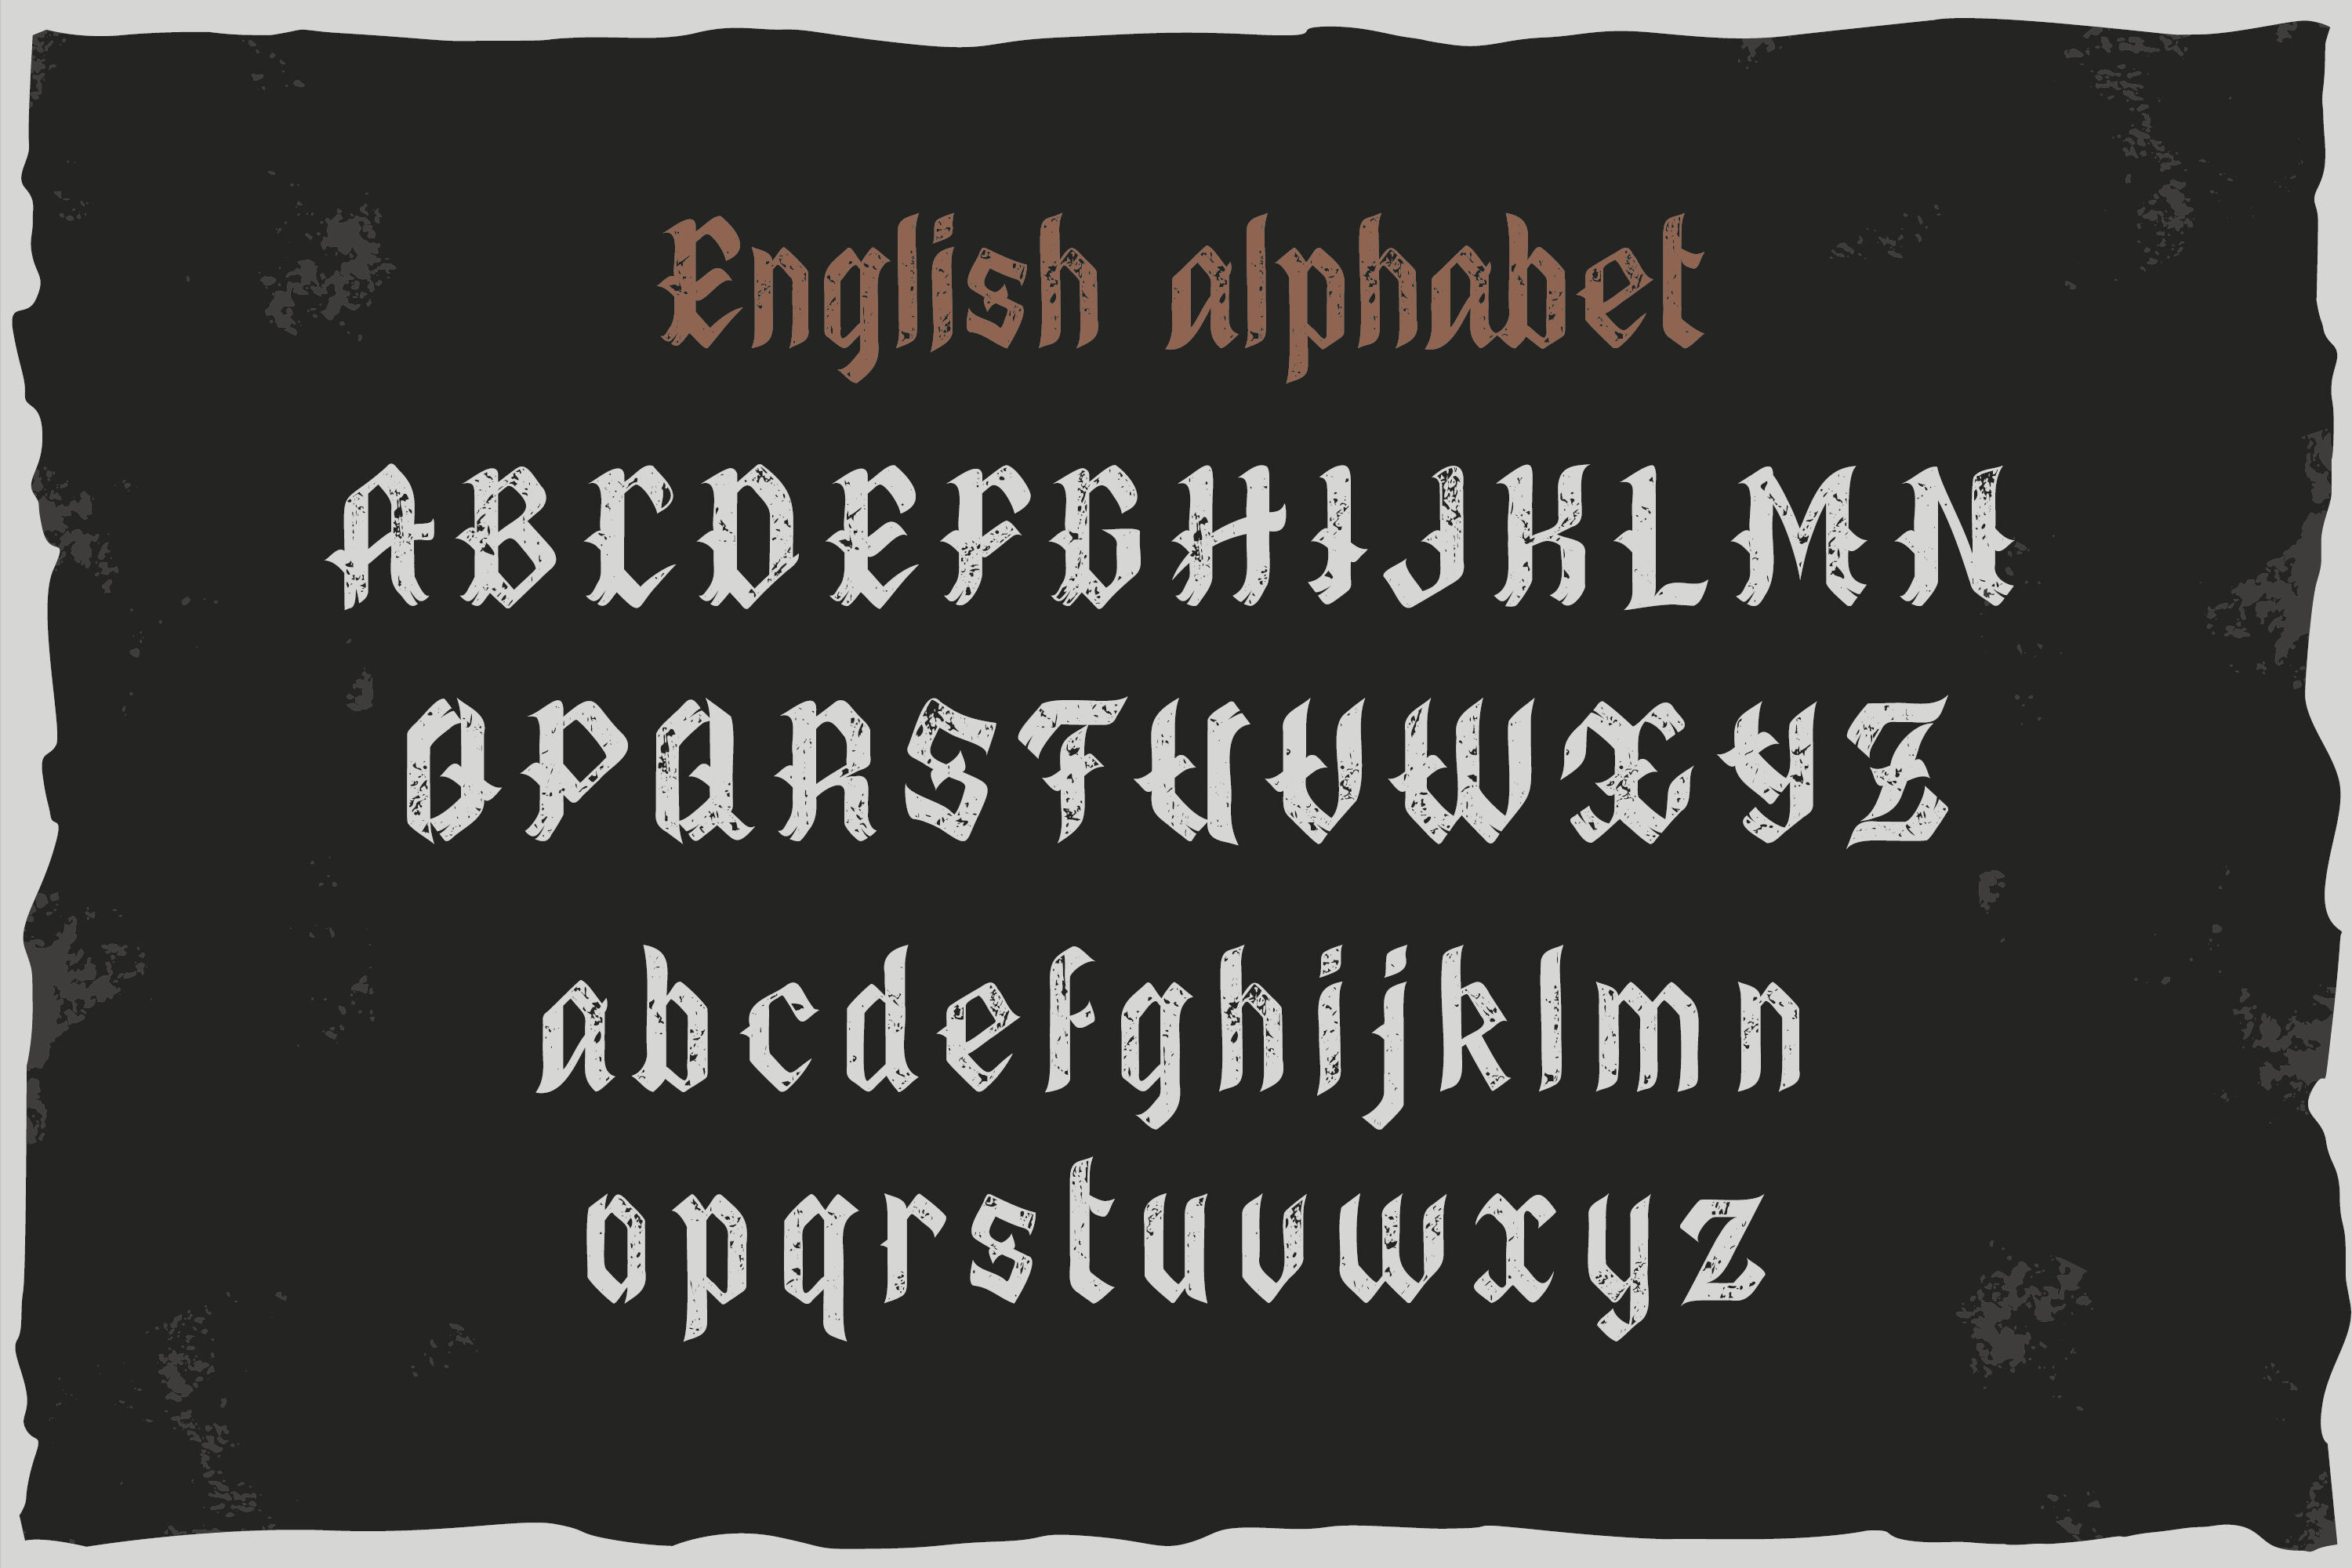 Antique Gothic Font - Download Free Font